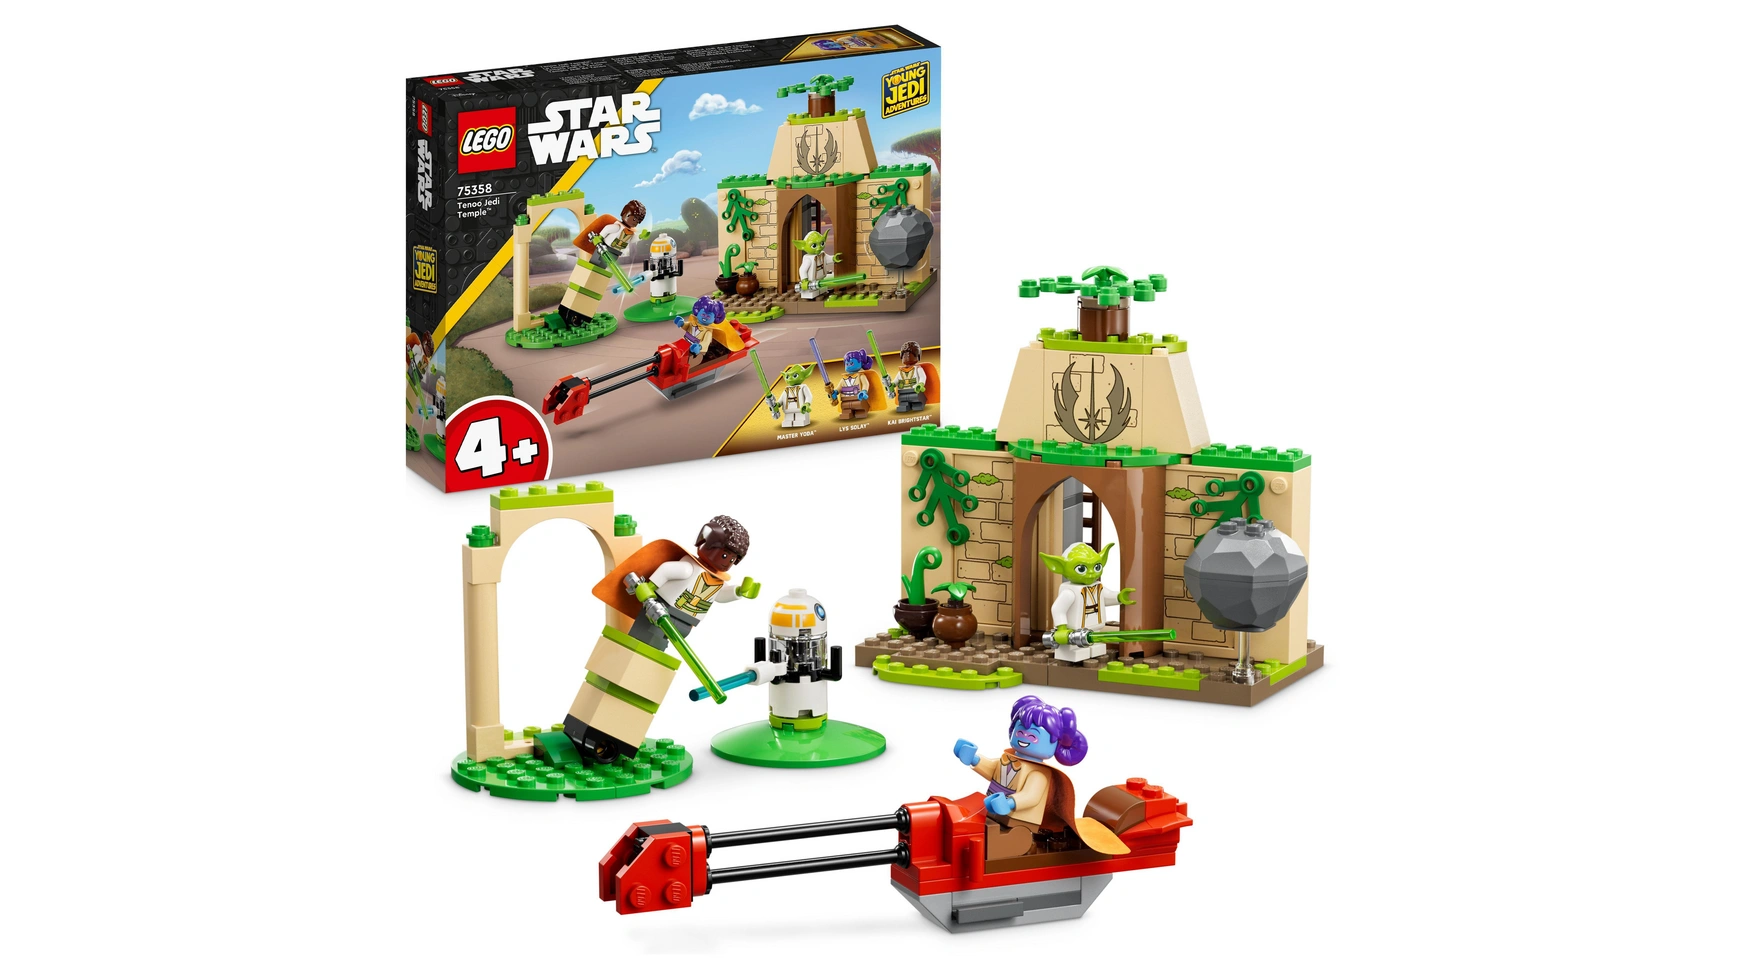 Lego Star Wars Набор Храм джедаев Тену 4+ с минифигурками долан ханна доусетт элизабет лэст шери lego star wars полная коллекция мини фигурок со всей галактики